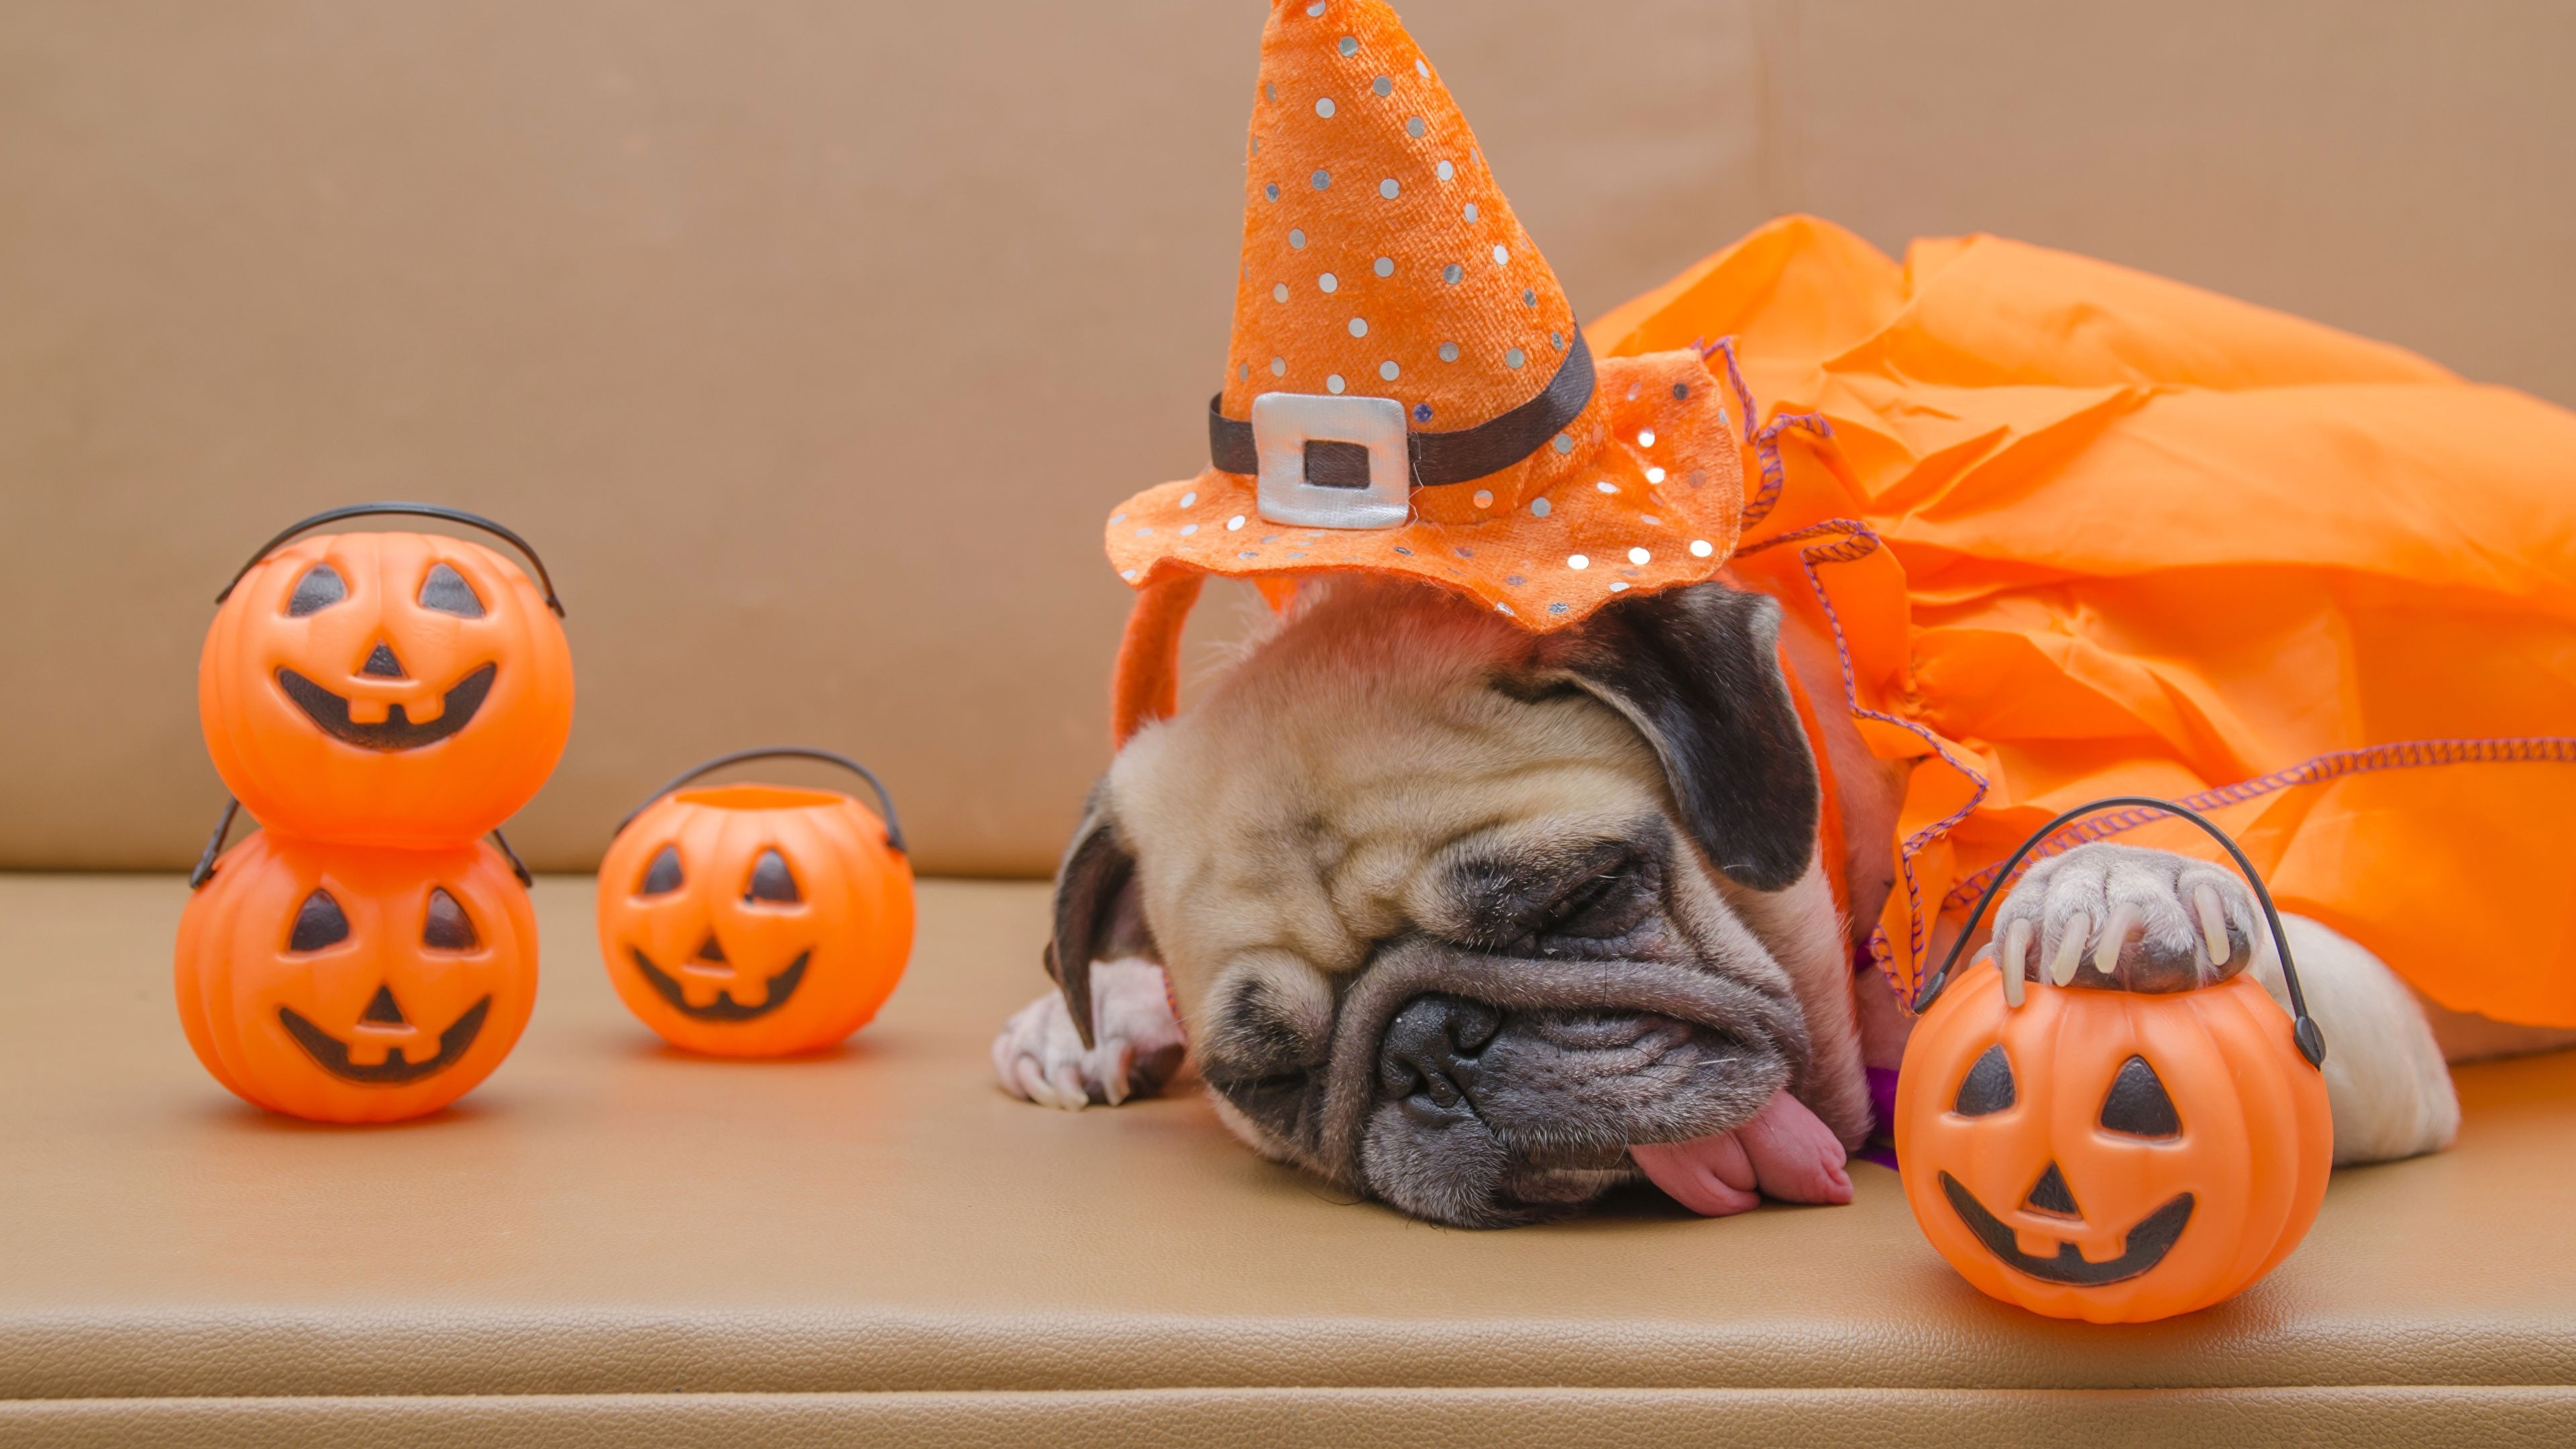 Pug Halloween wallpapers, Spooky pug costumes, Festive celebrations, Adorable Halloween pets, 3840x2160 4K Desktop